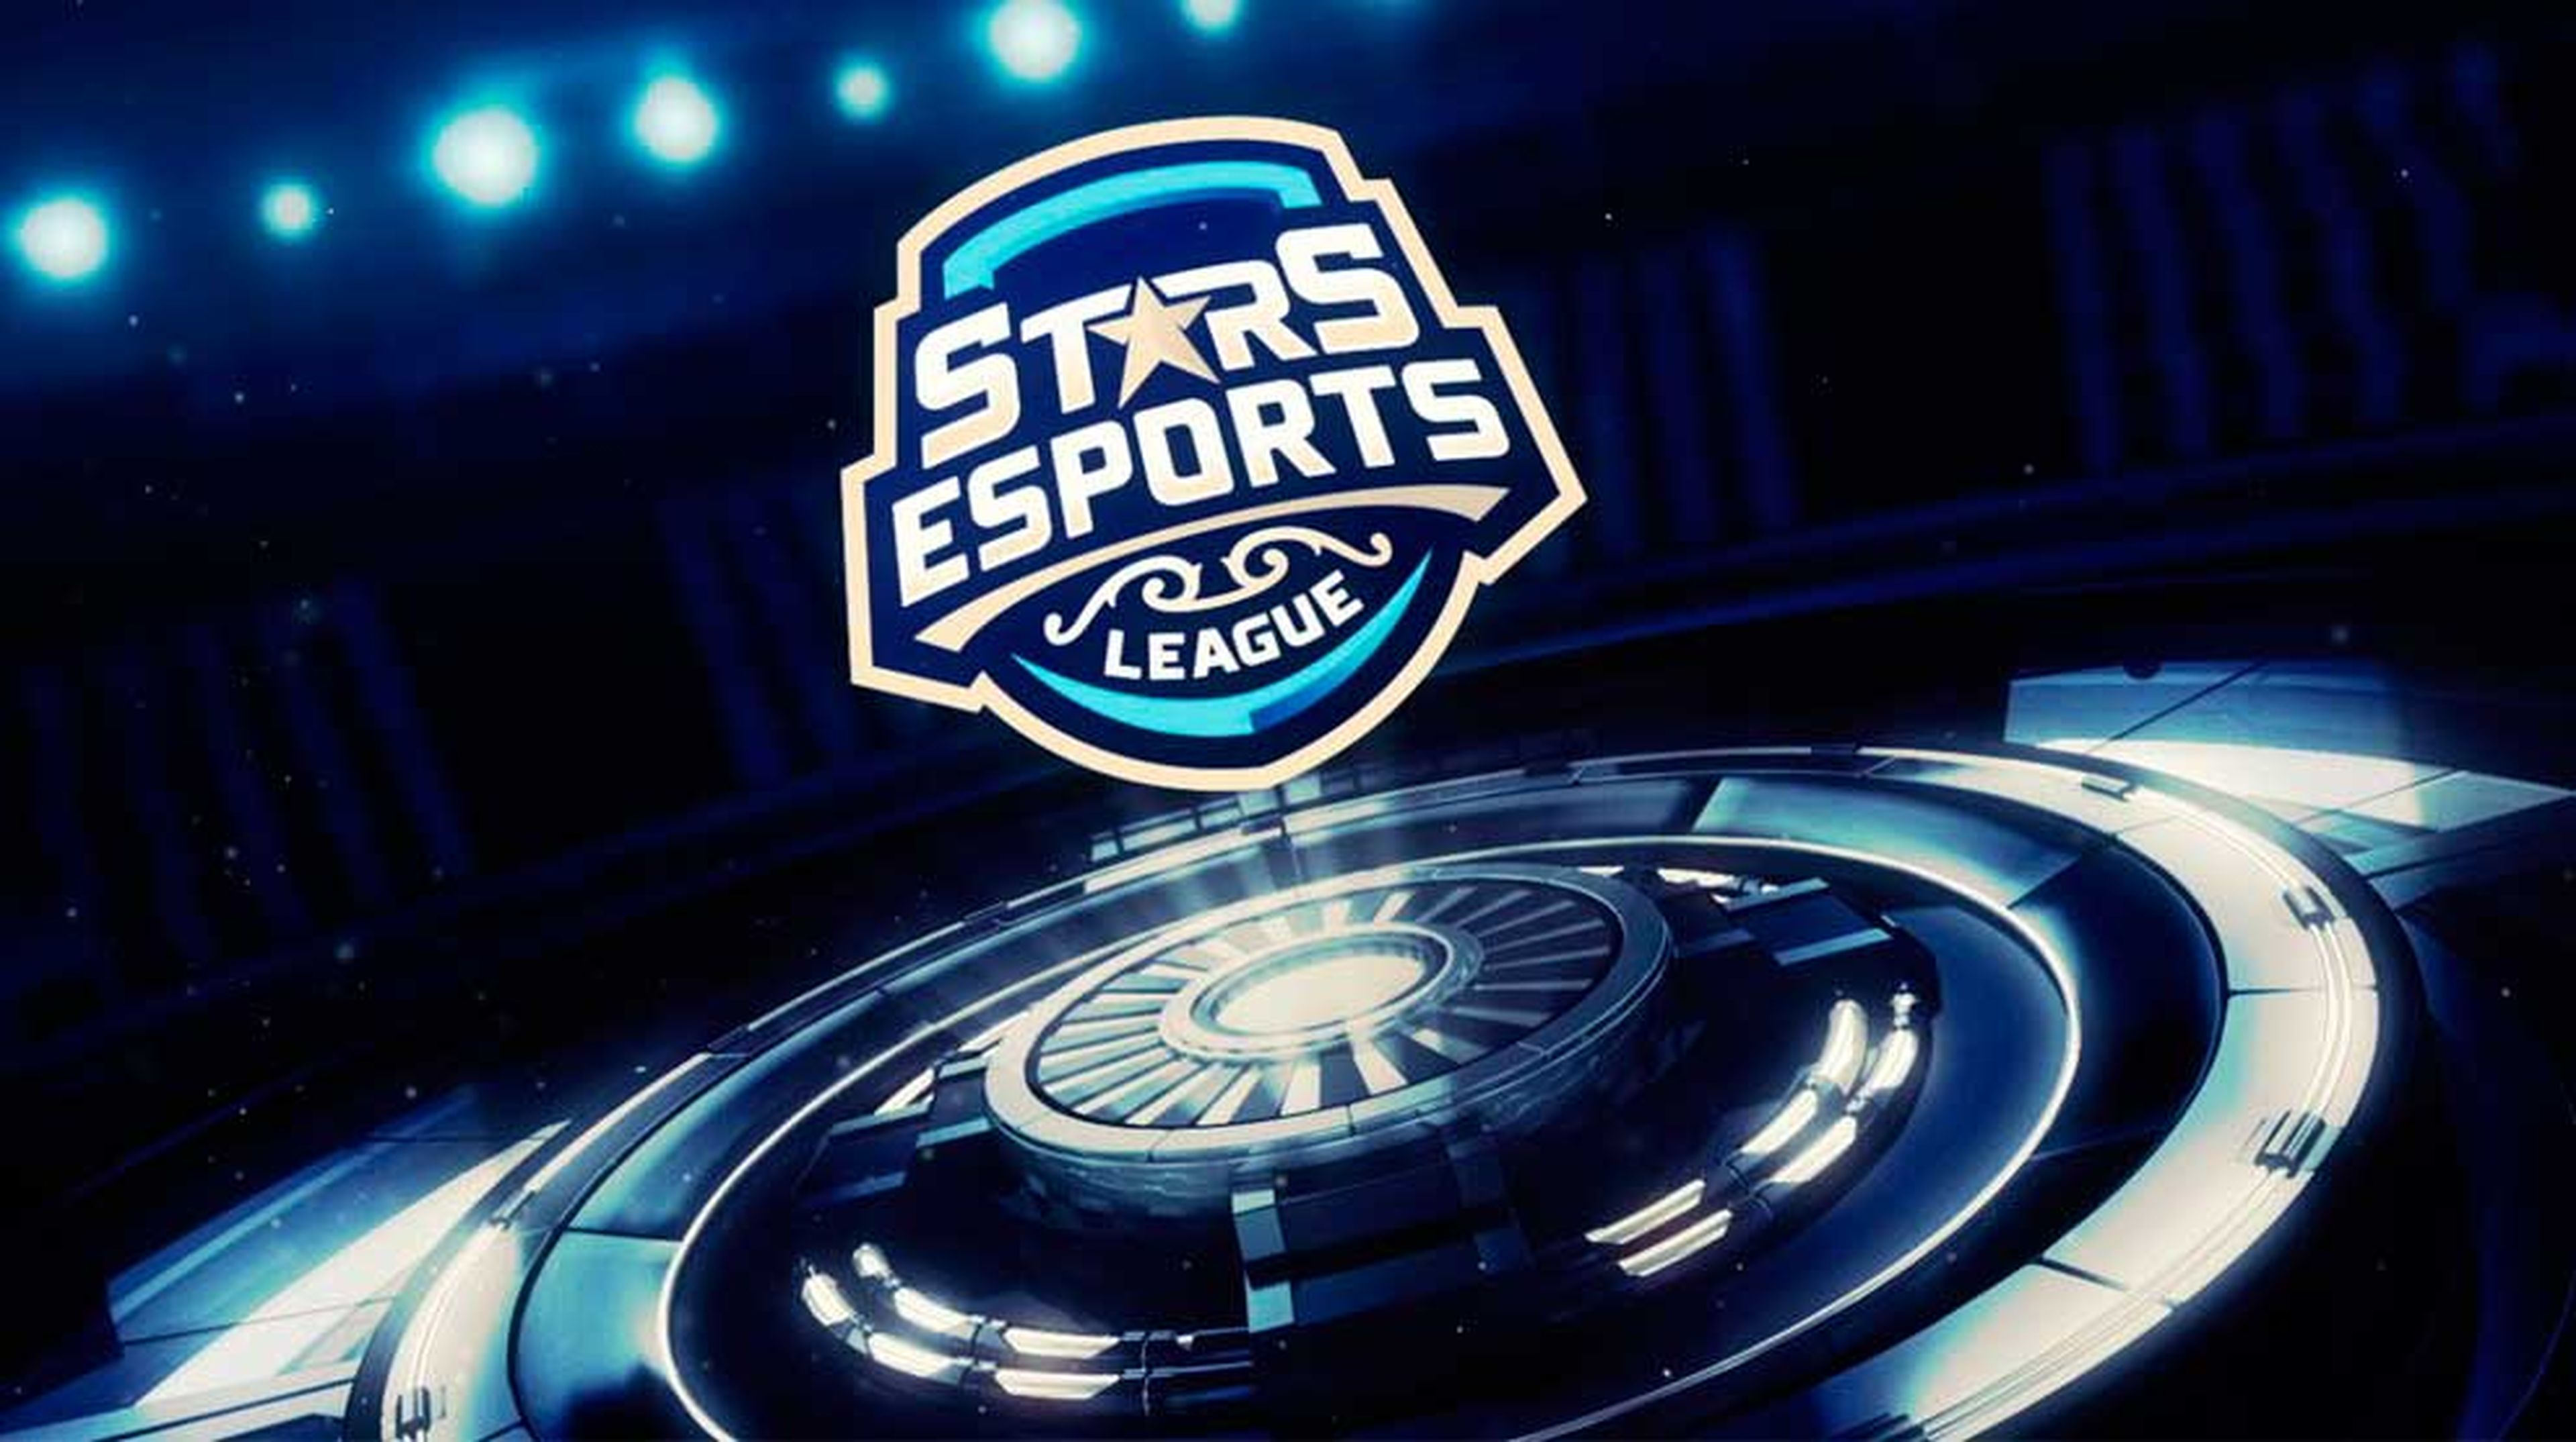 Stars eSports League